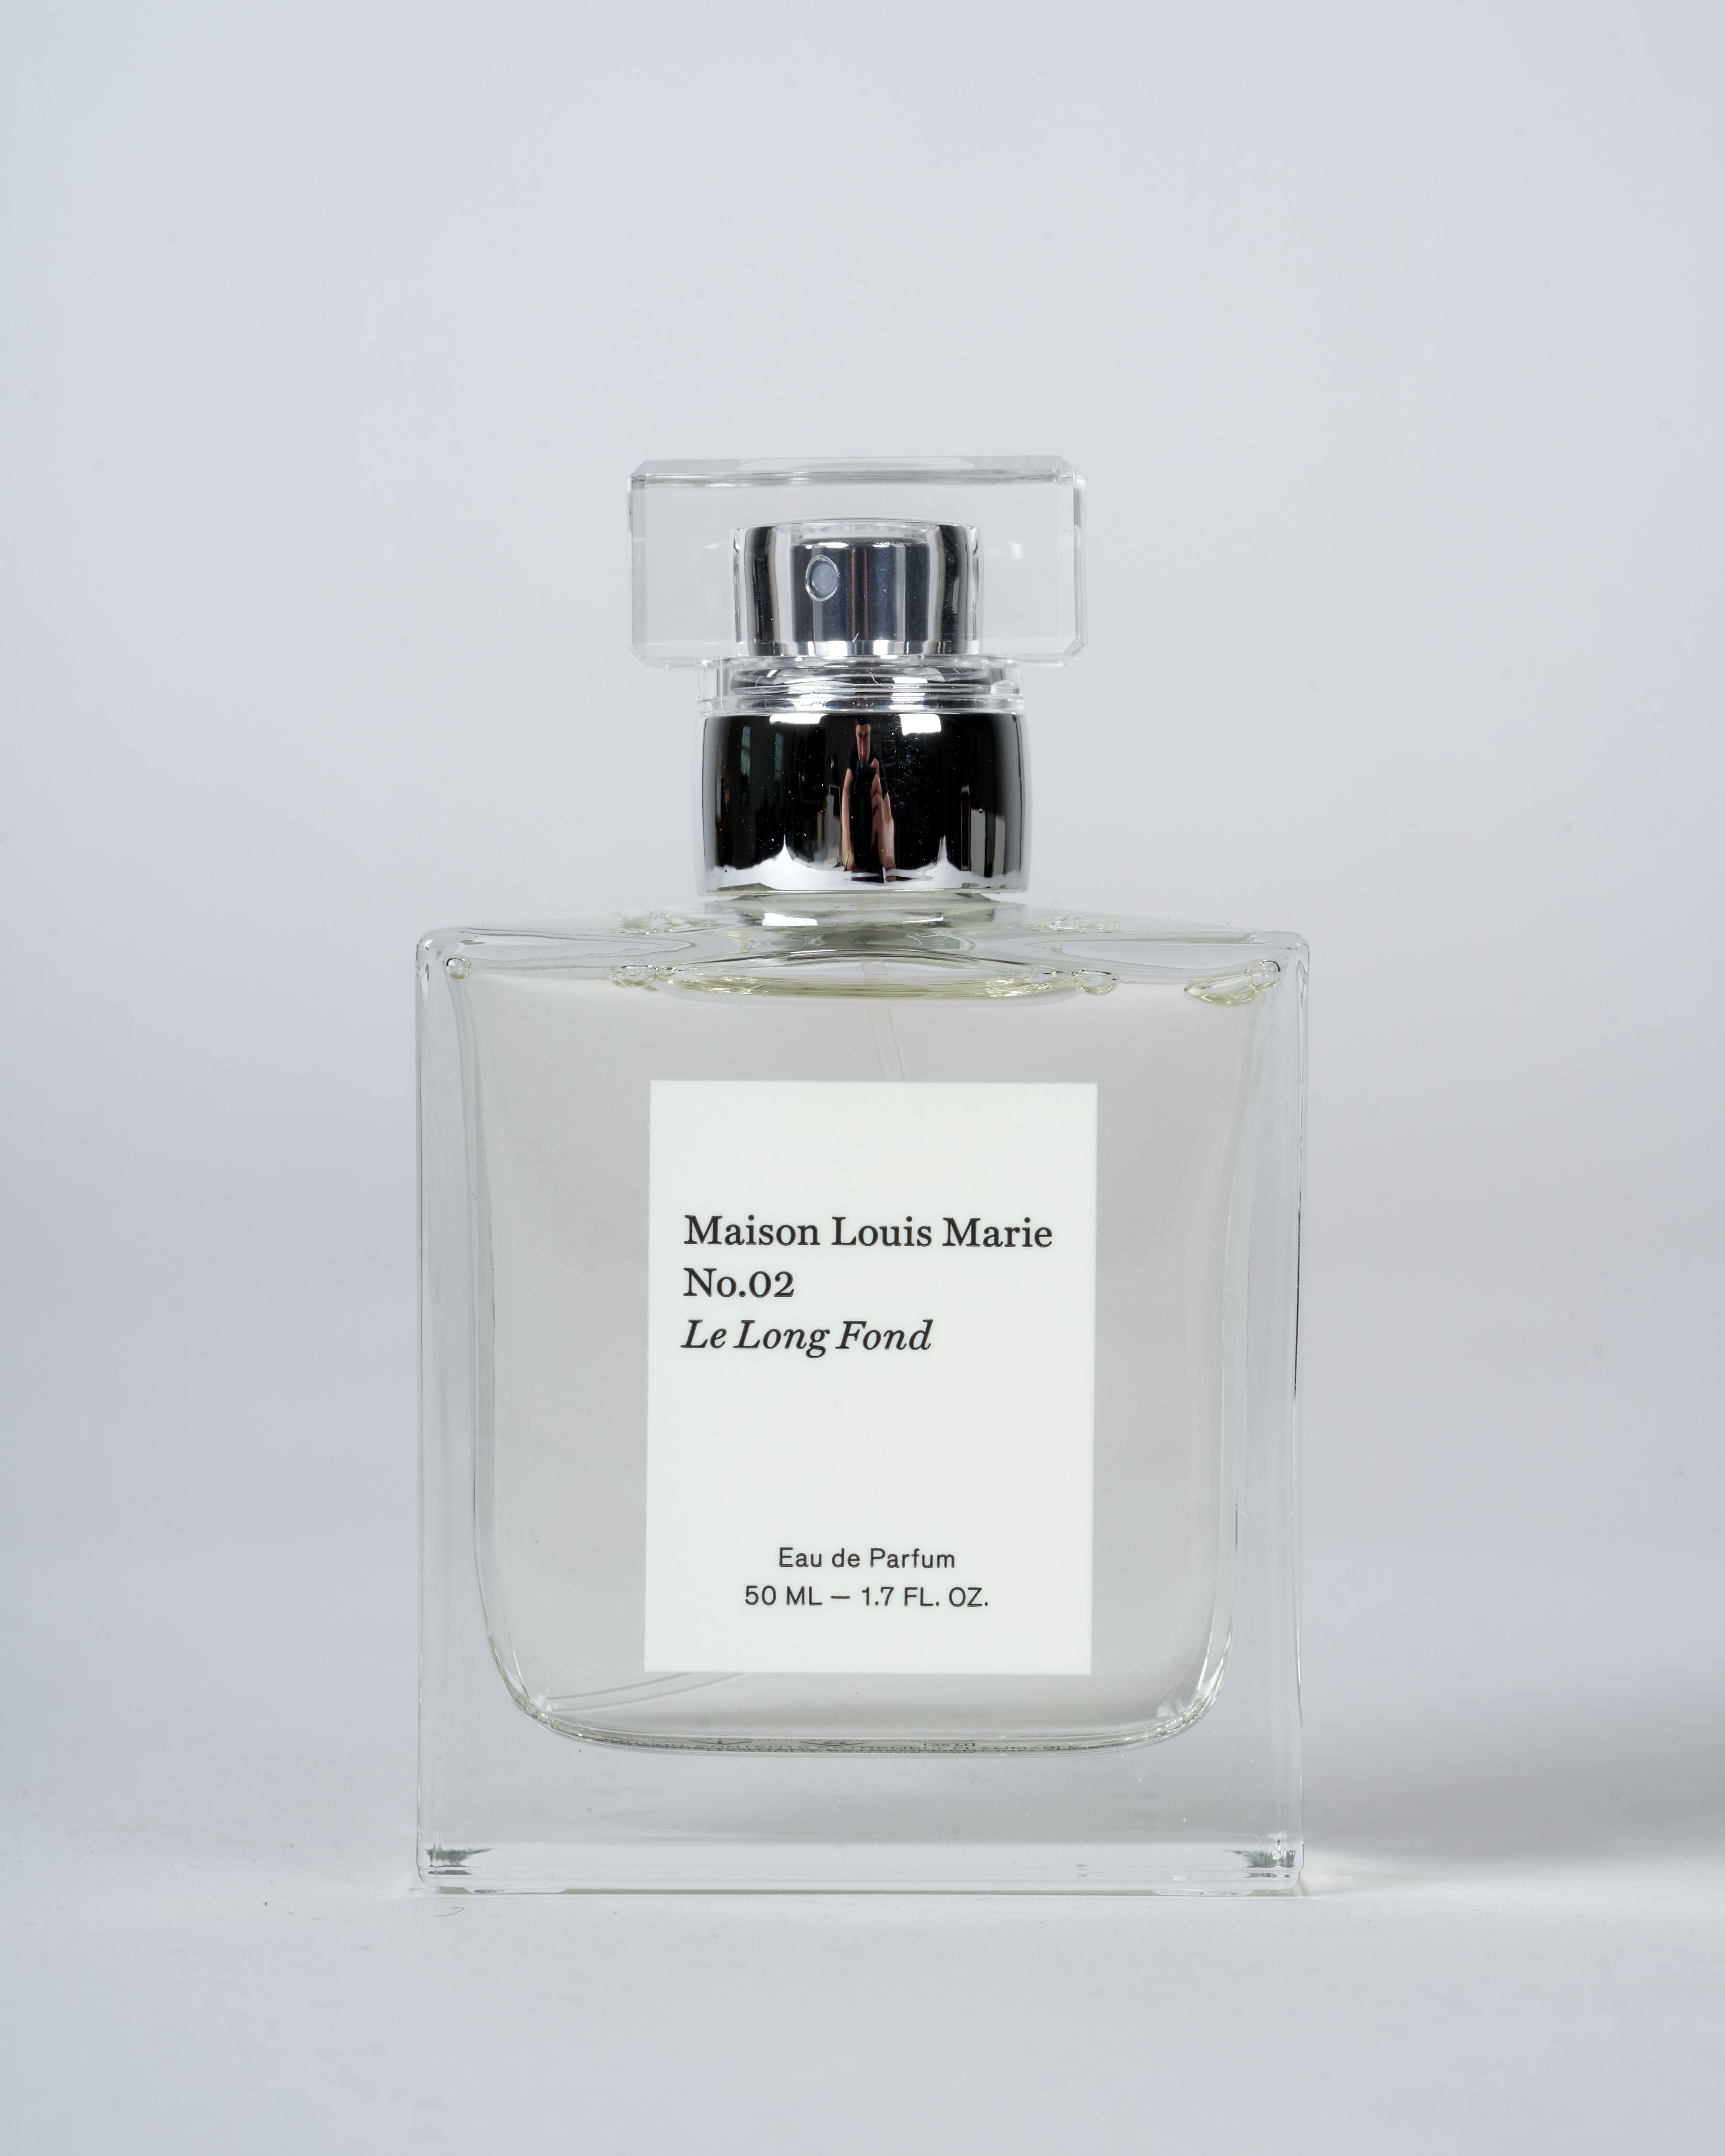 Maison Louis Marie Antidris Cassis Perfume Oil